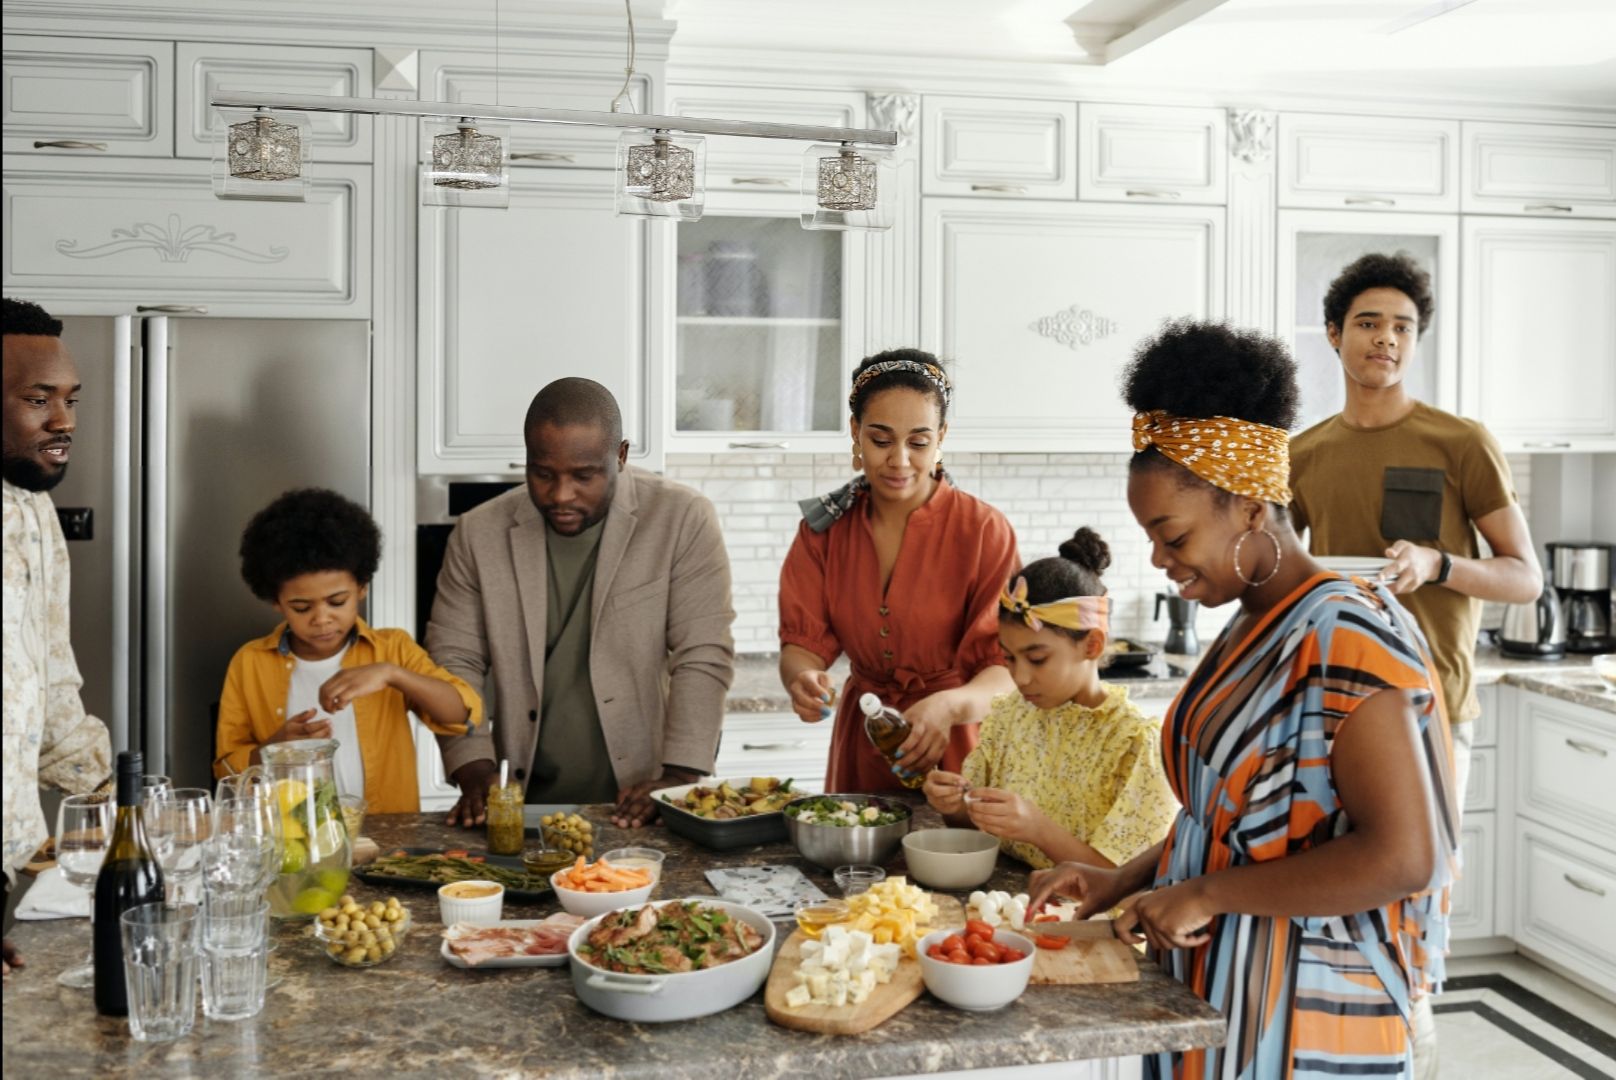 Photo by August de Richelieu: https://www.pexels.com/photo/family-preparing-food-in-the-kitchen-4262010/